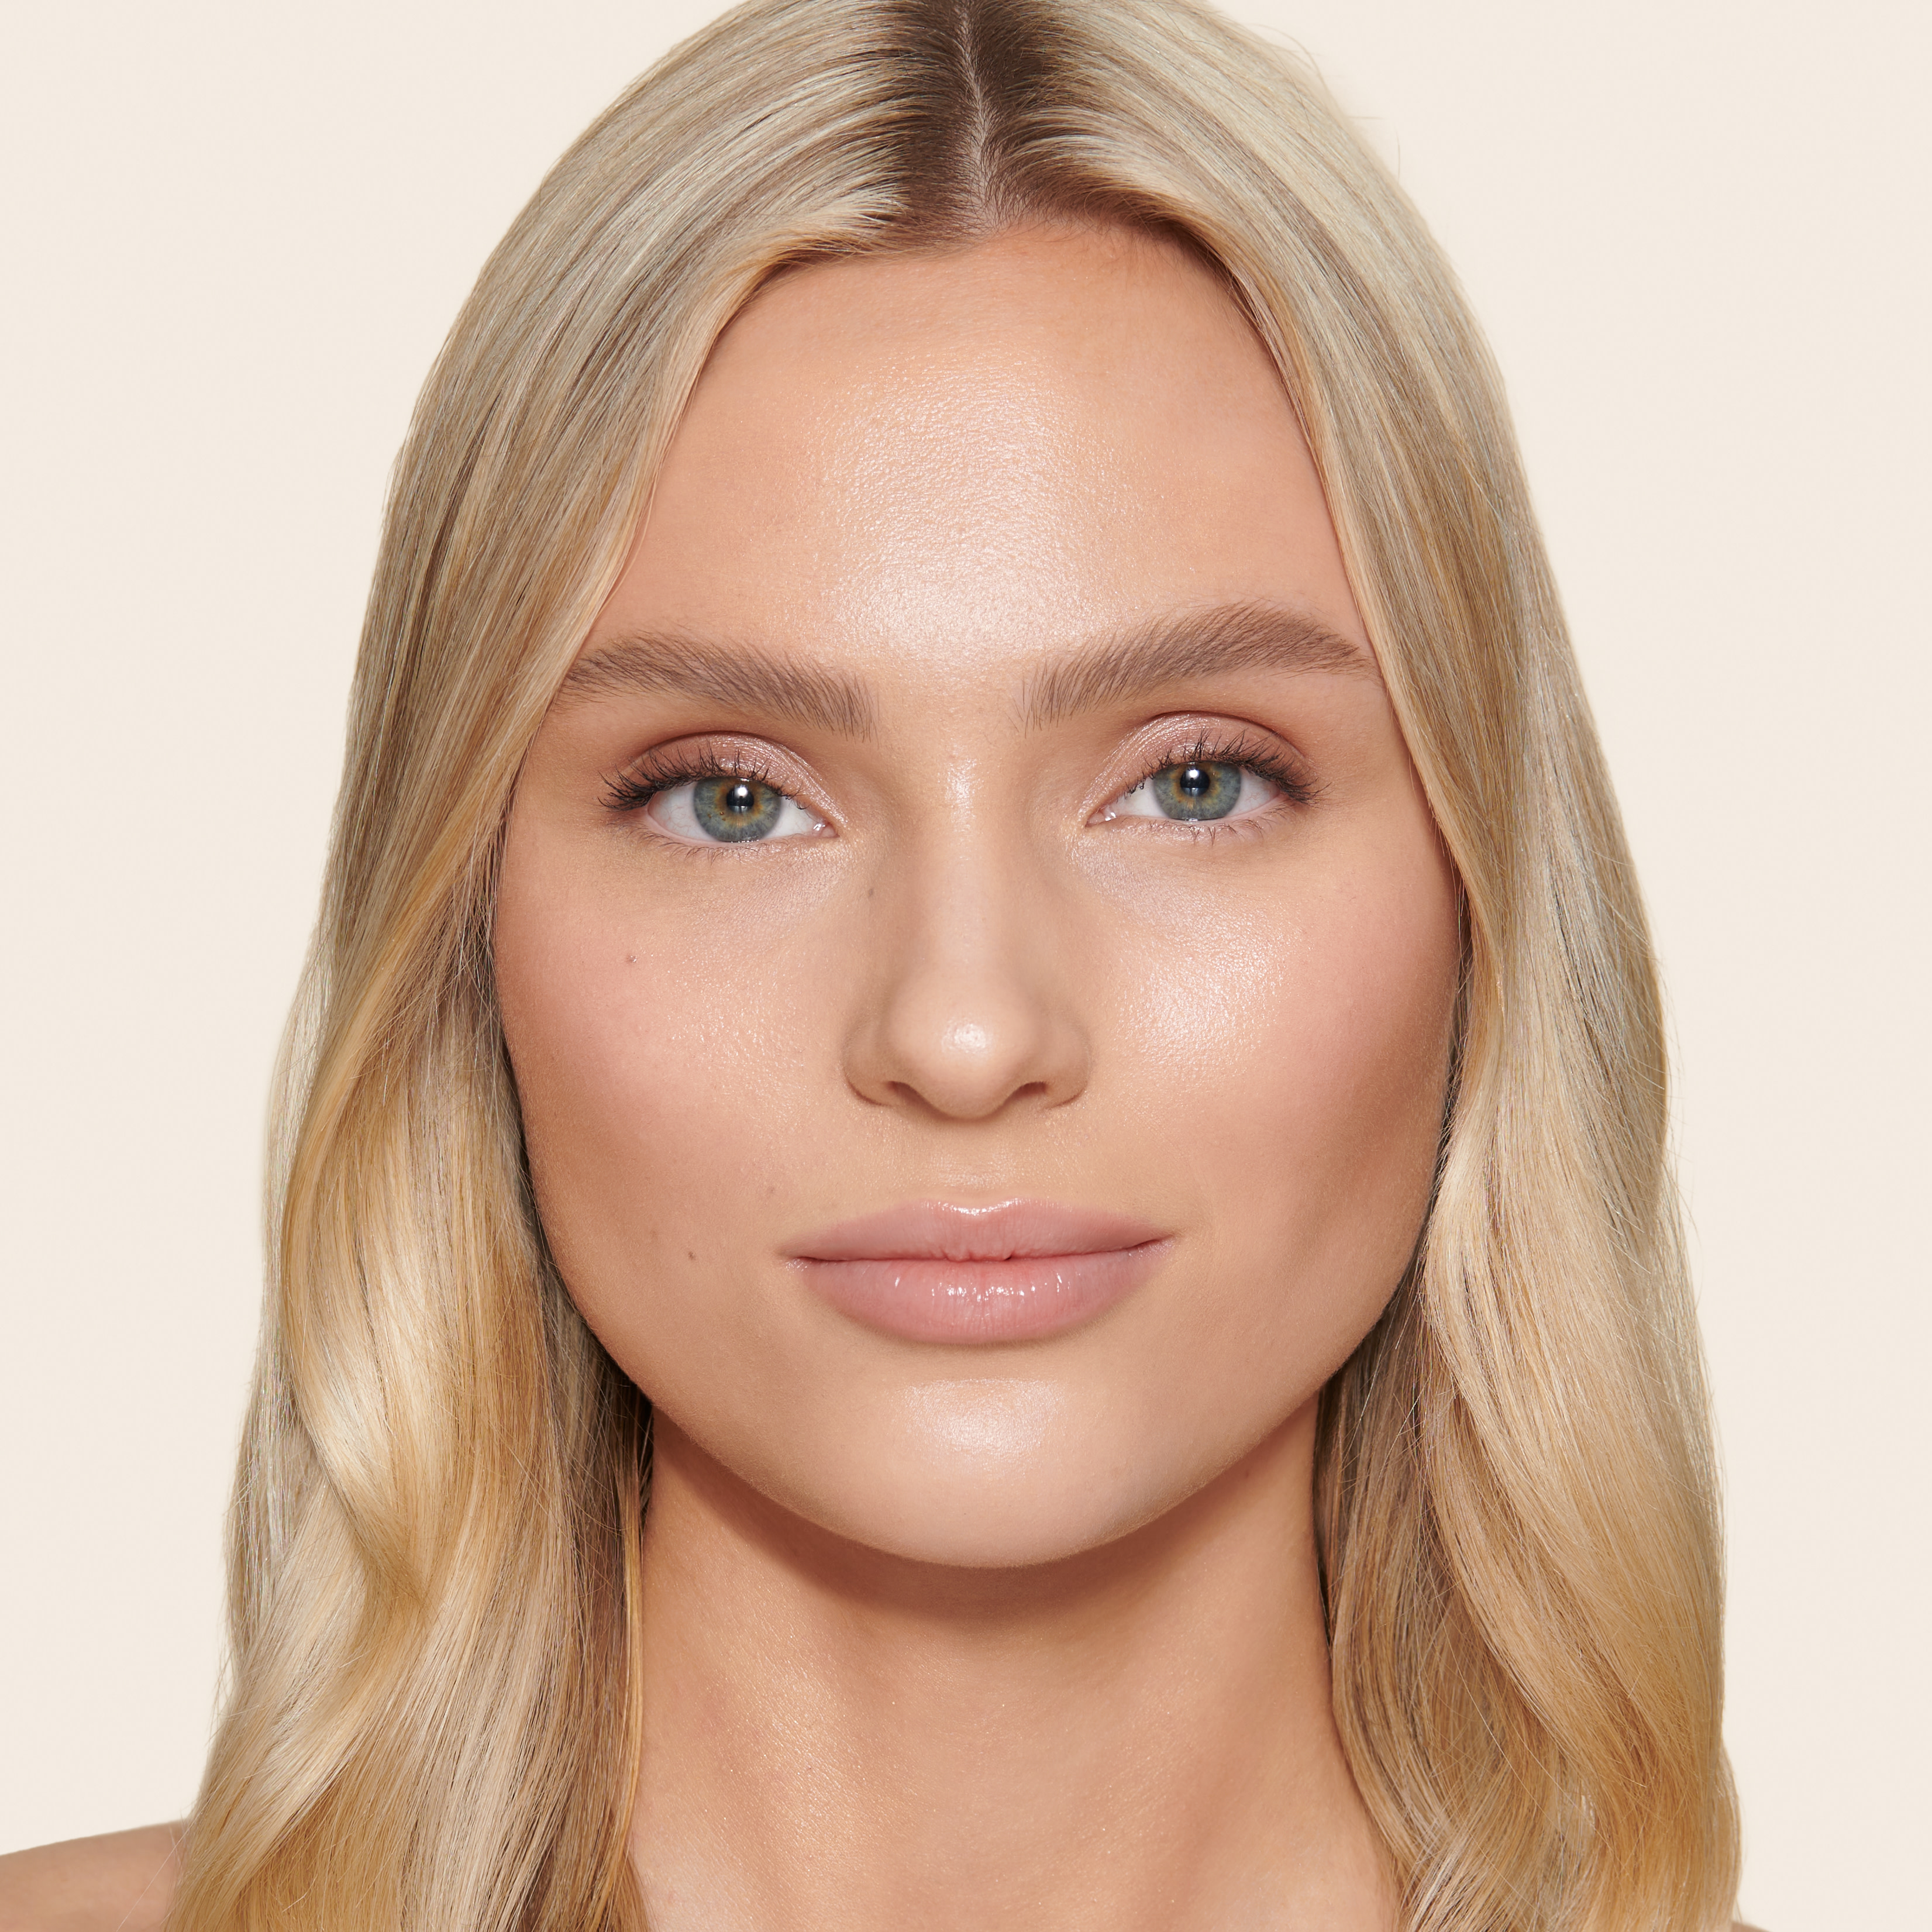 Model wearing a natural makeup look using Unisex Healthy Glow tinted moisturiser